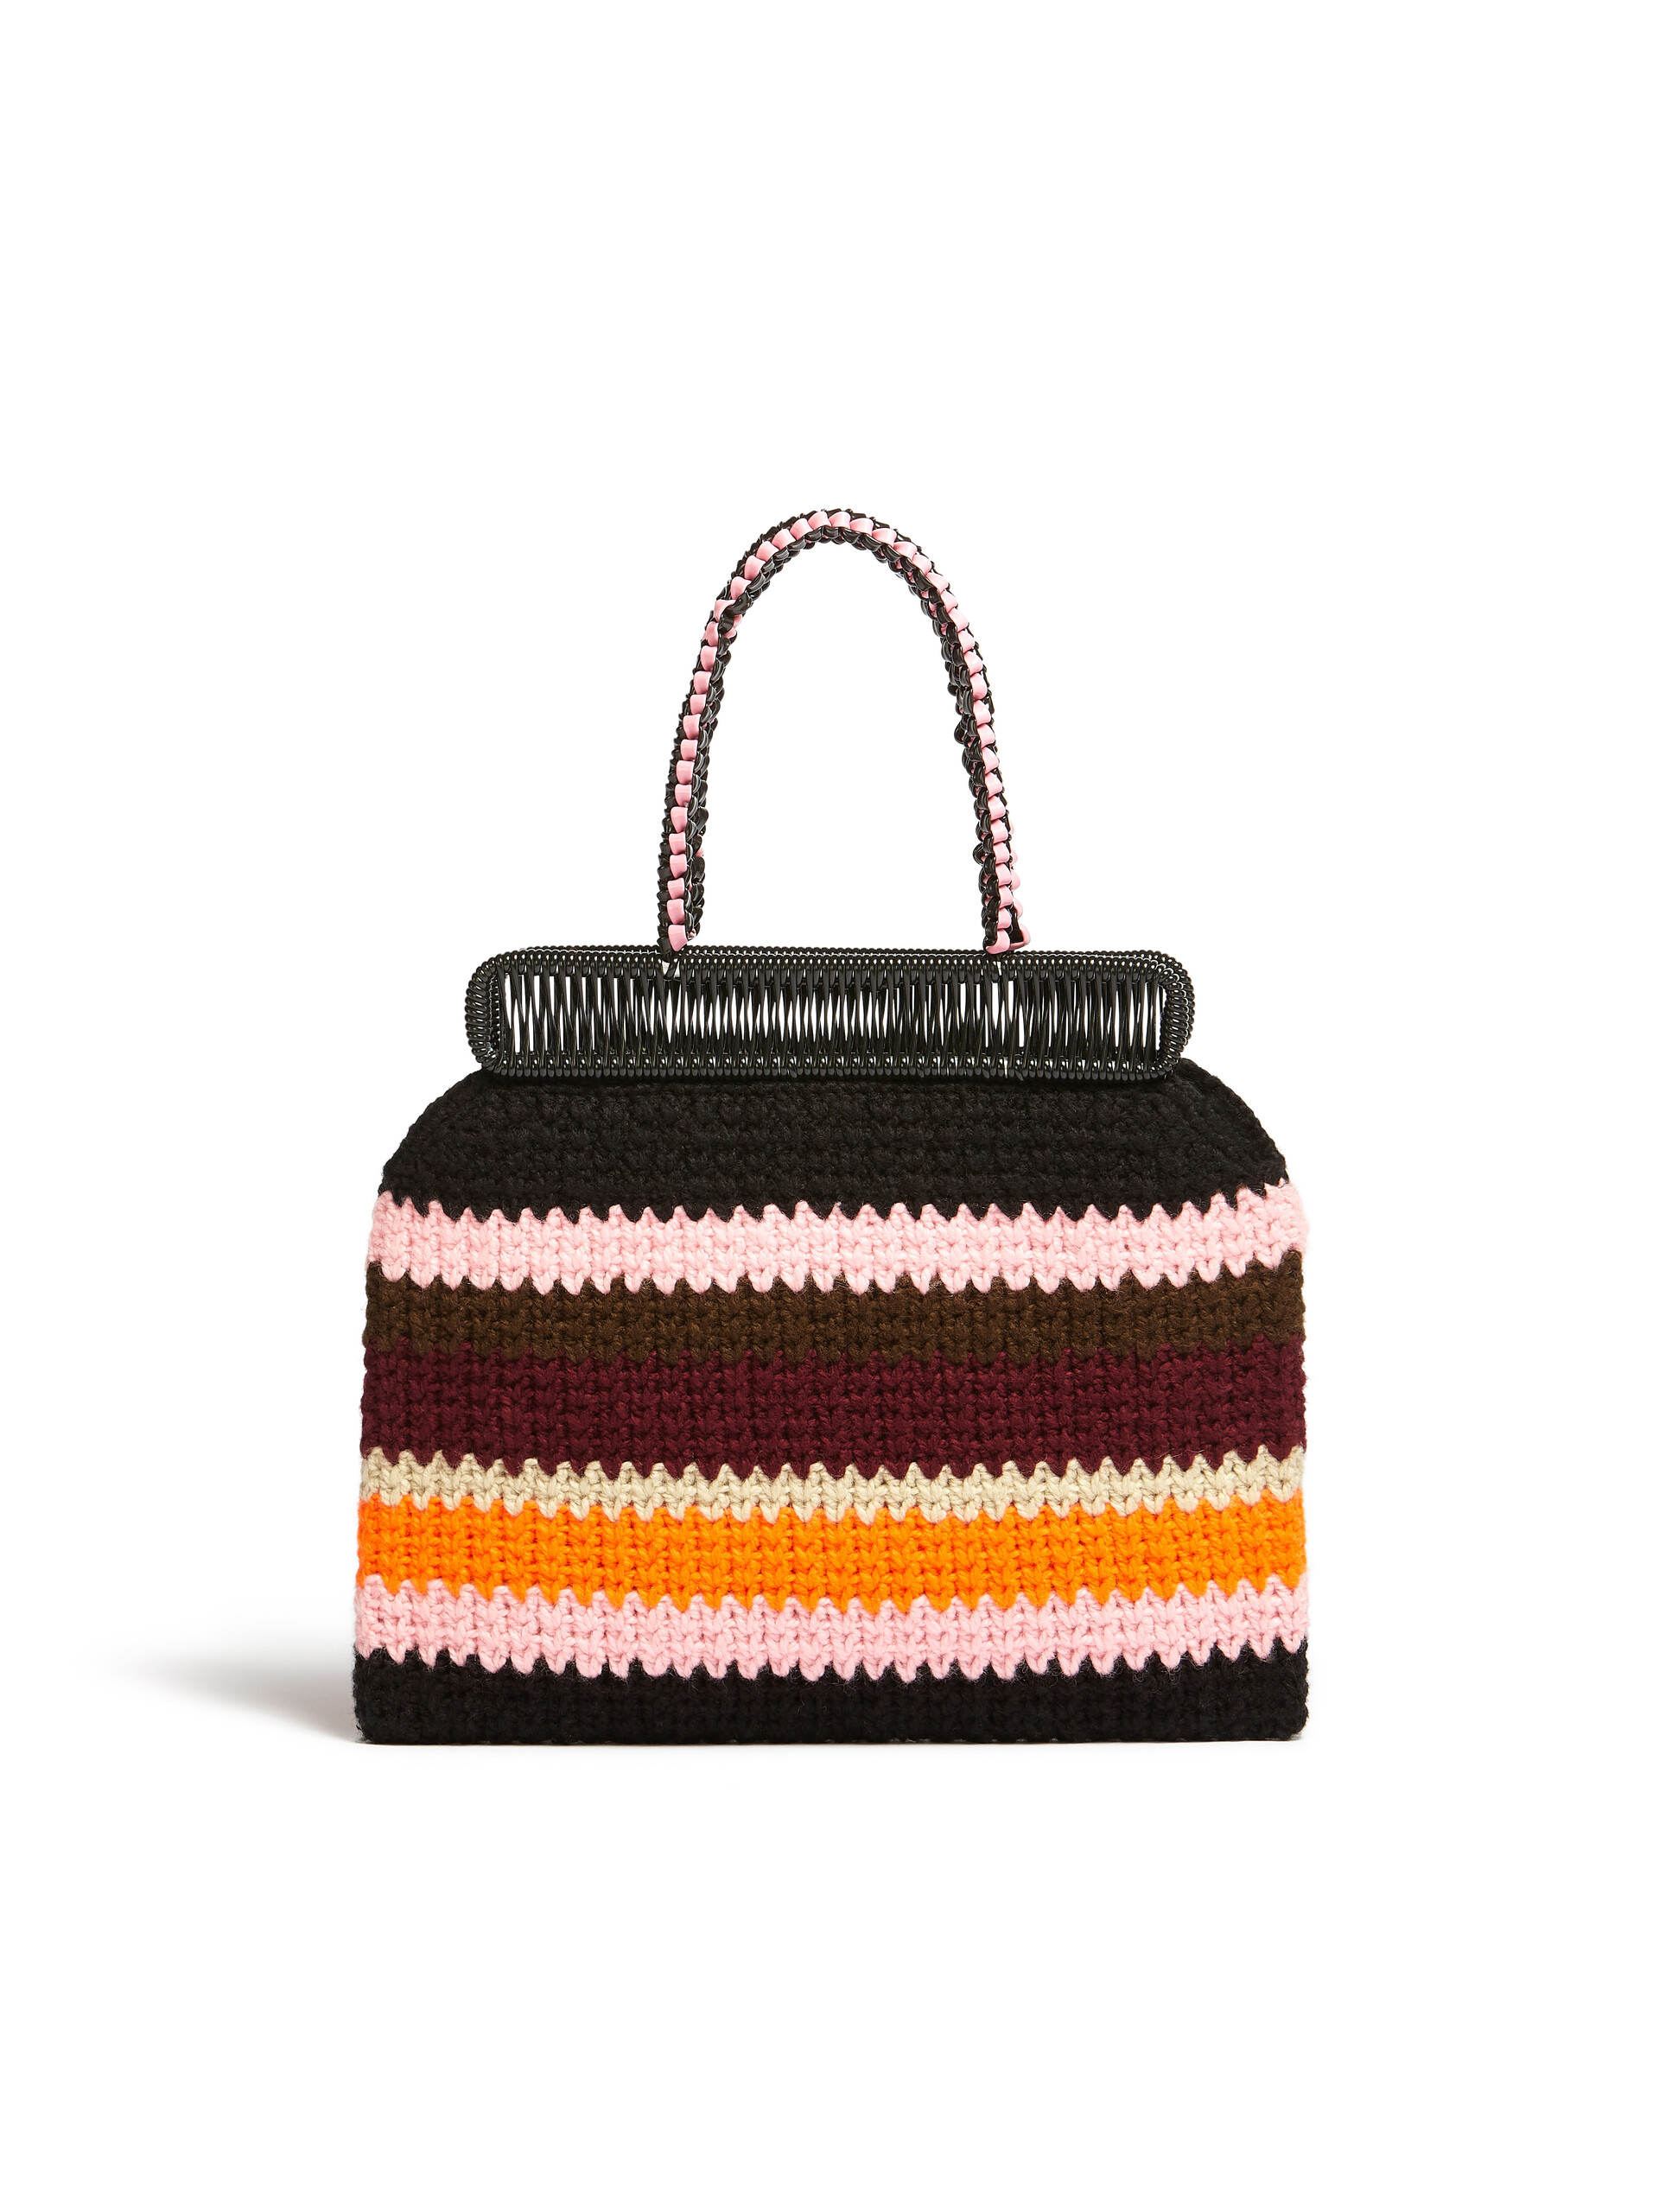 MARNI MARKET bag in multicolour pink crochet wool | Marni